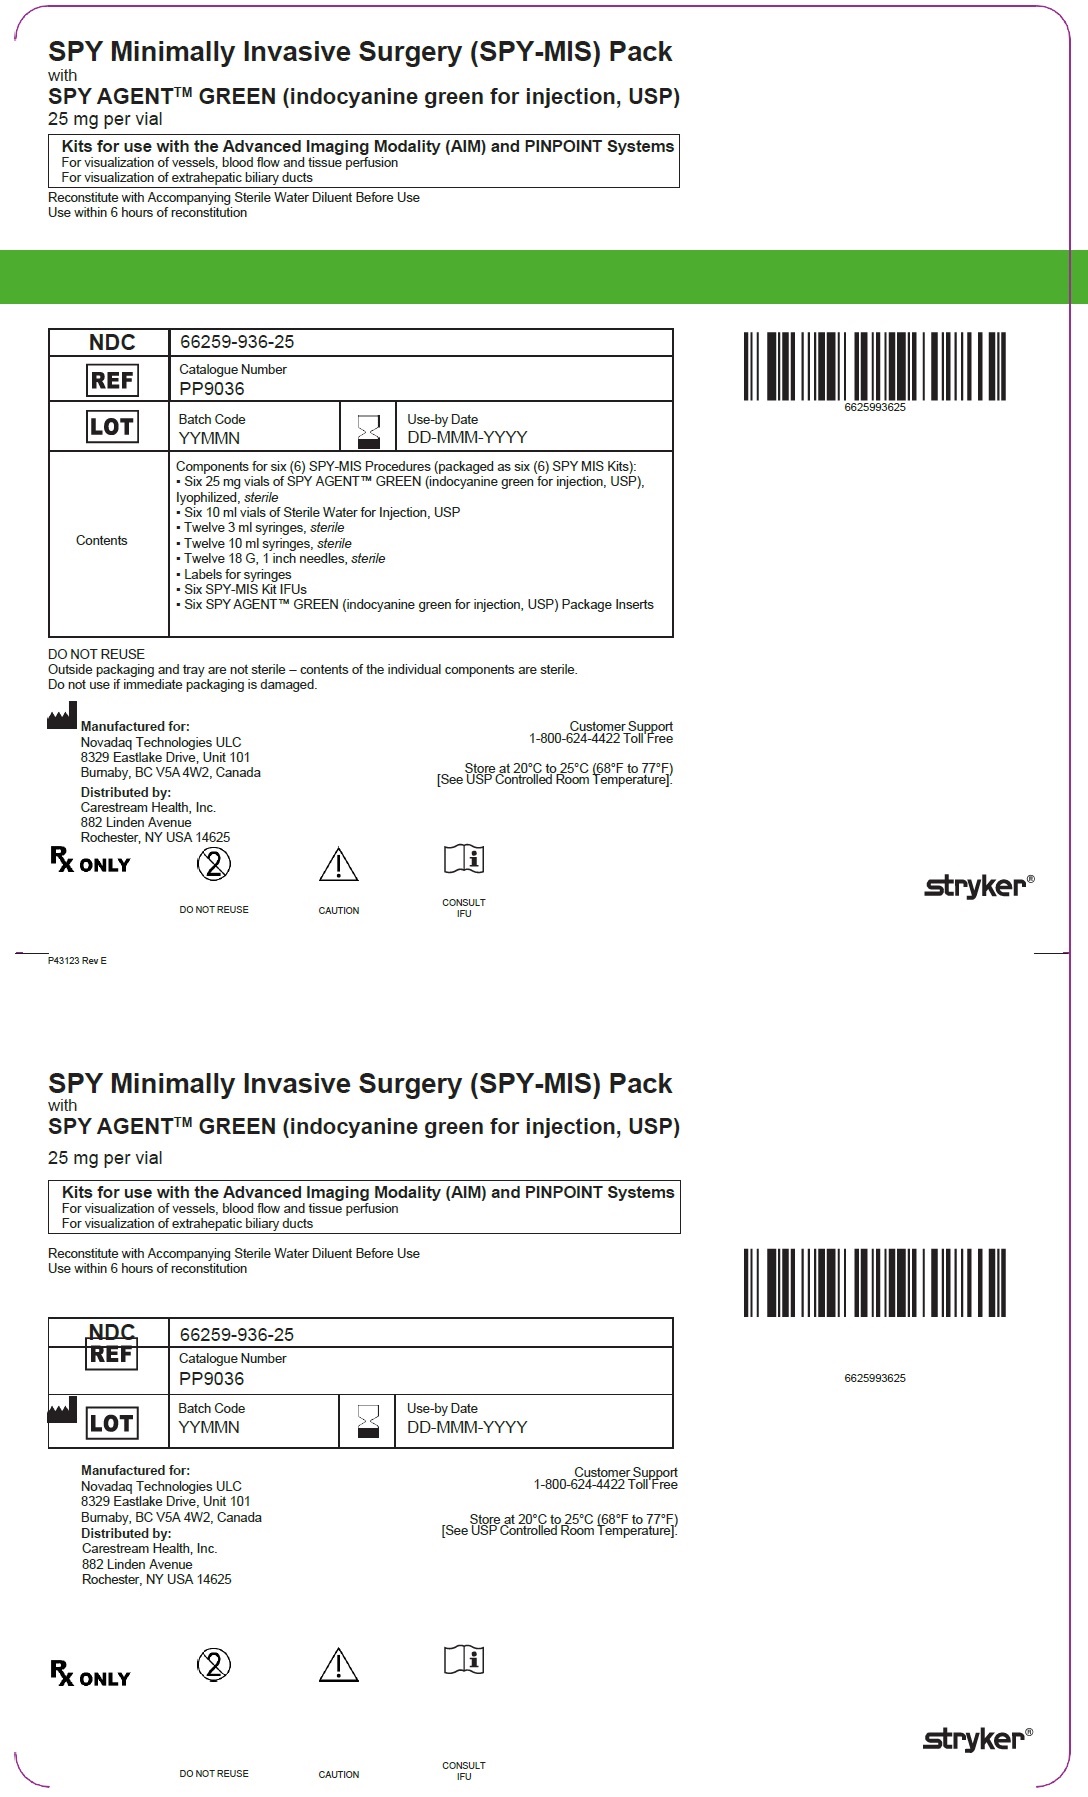 (SPY-MIS) Label Pack (Front)